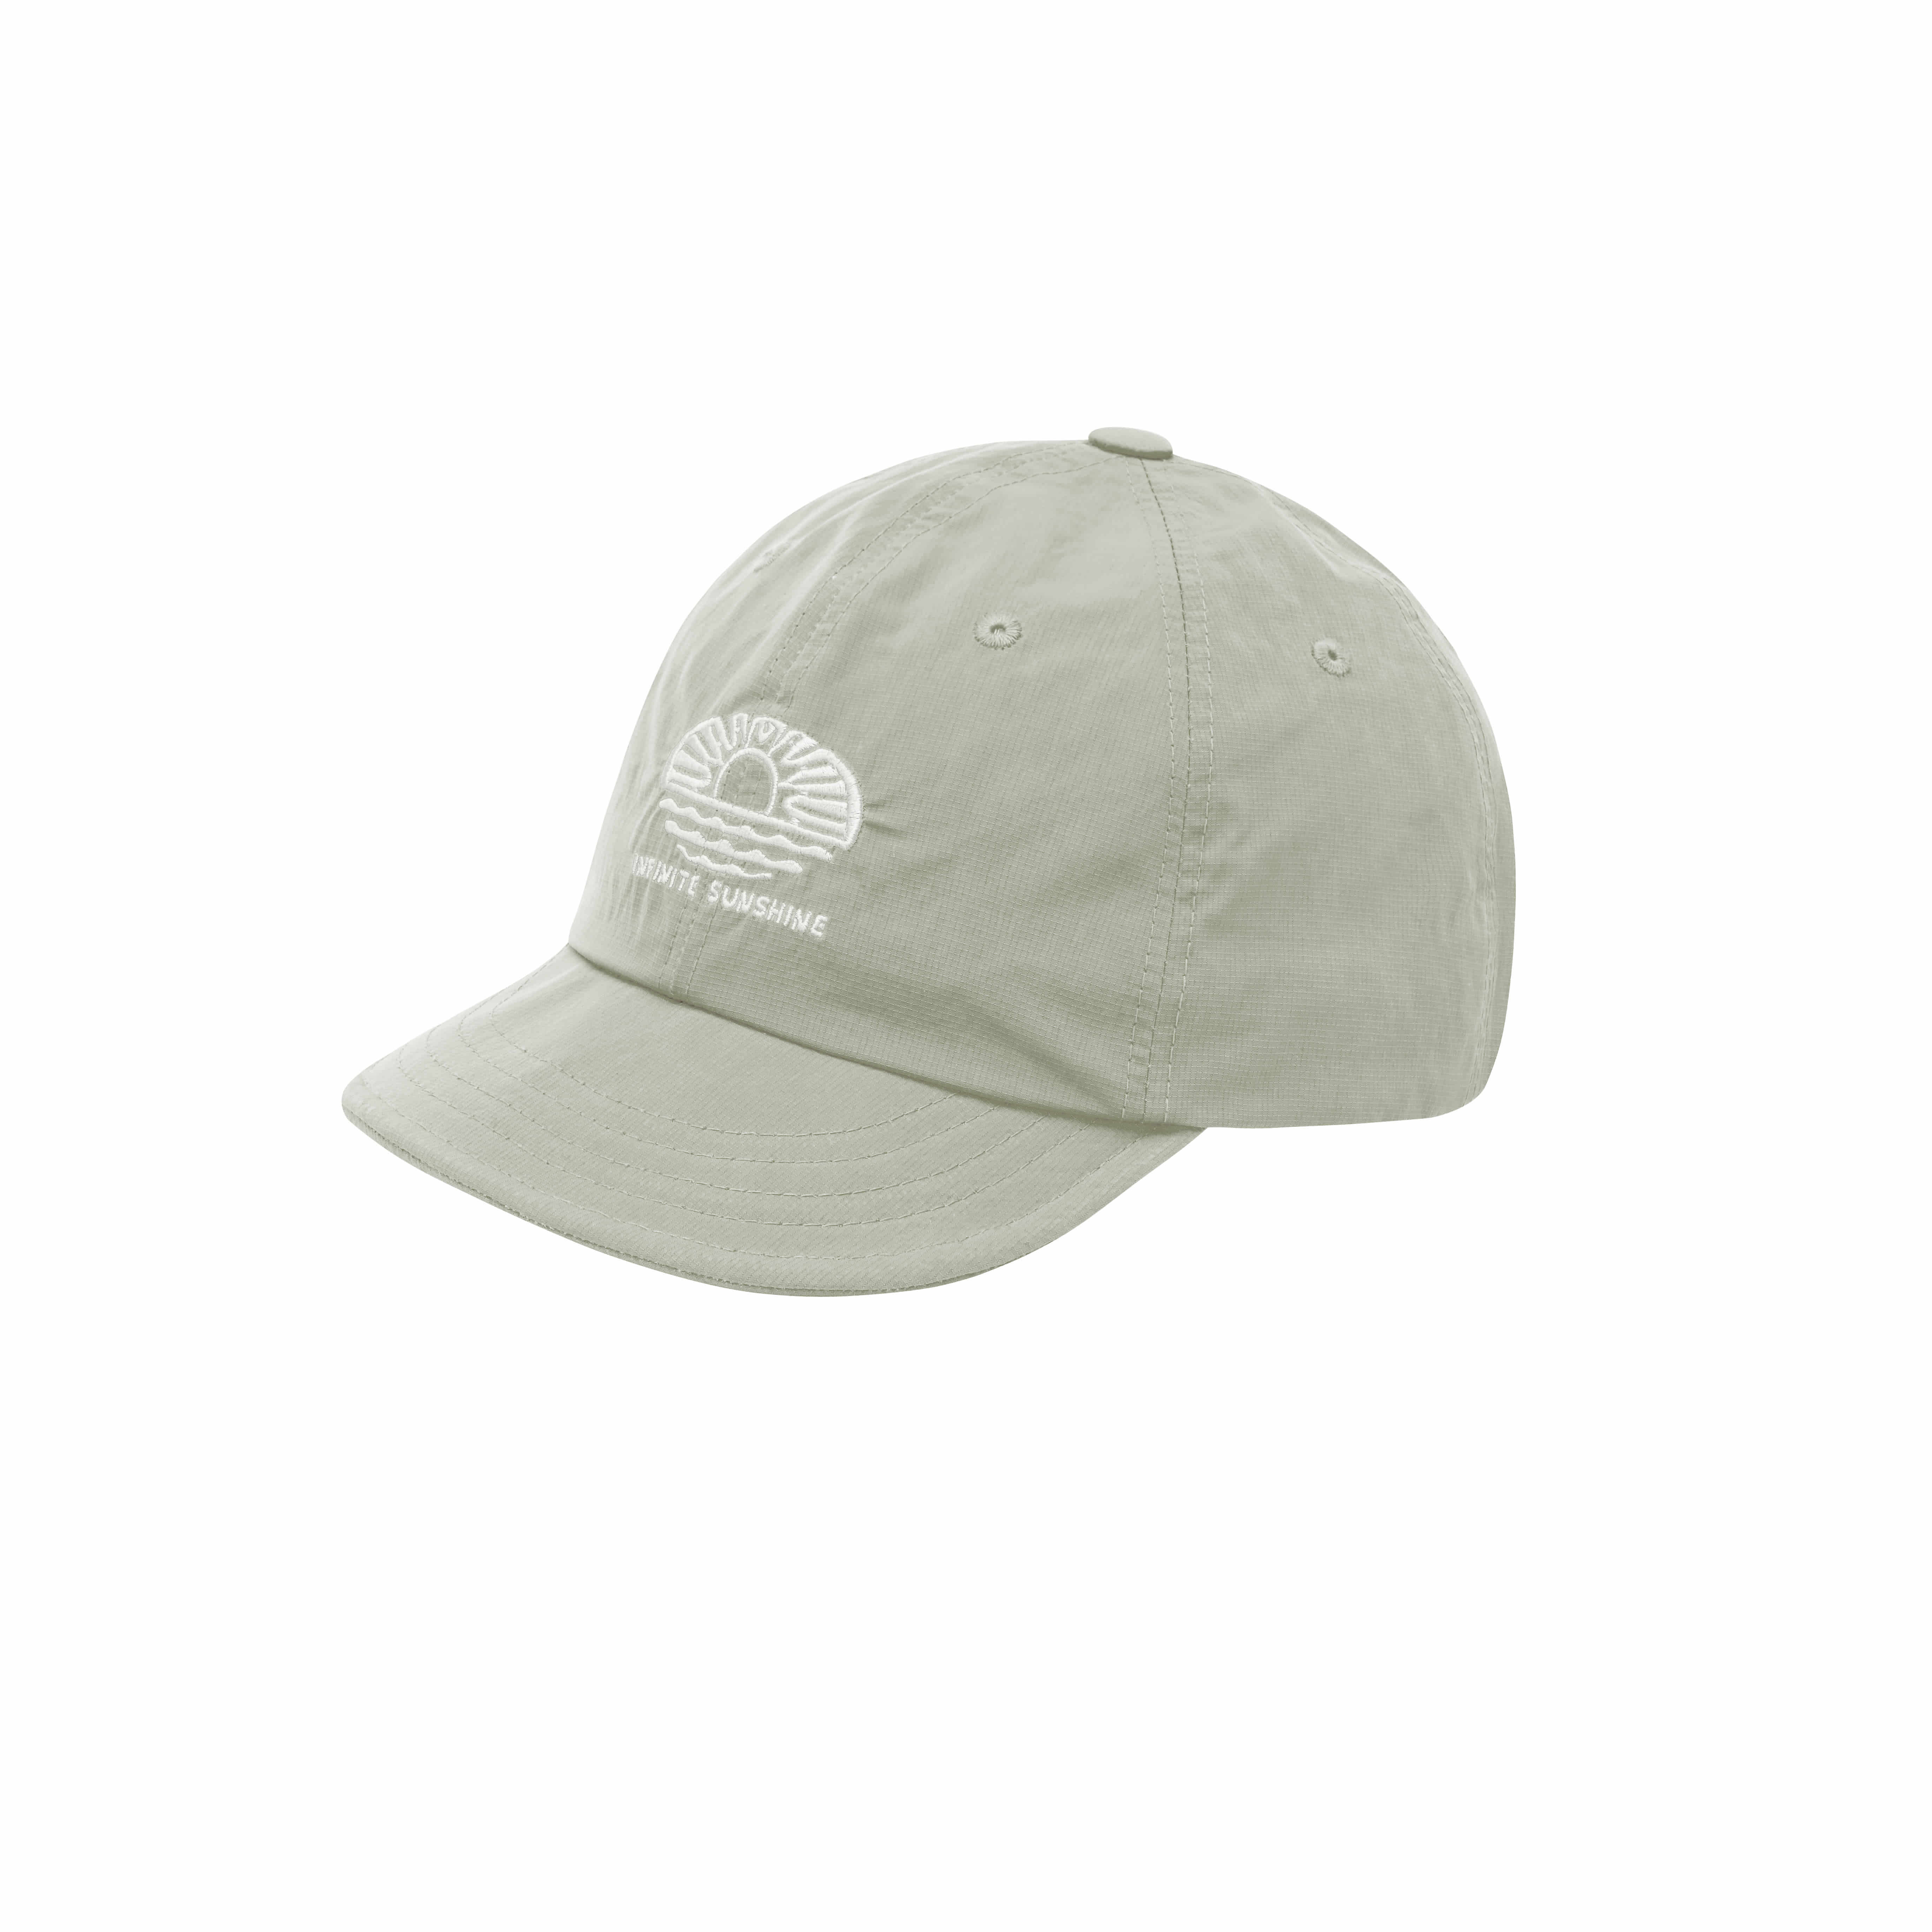 Ripstop sunshine cap light gray